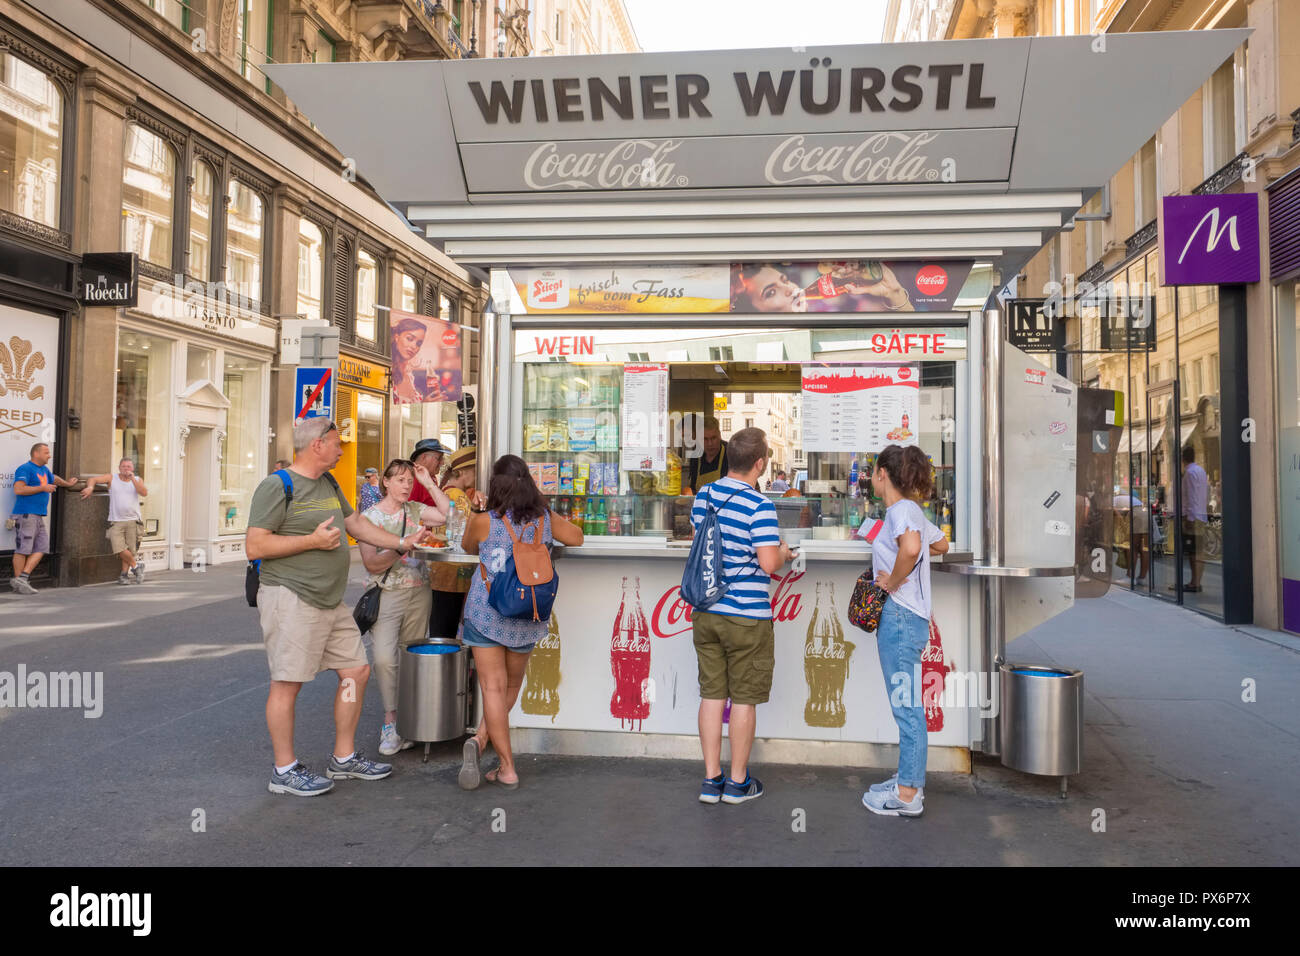 Wurst, Hot Dog stall in Vienna, Austria, Europe Stock Photo